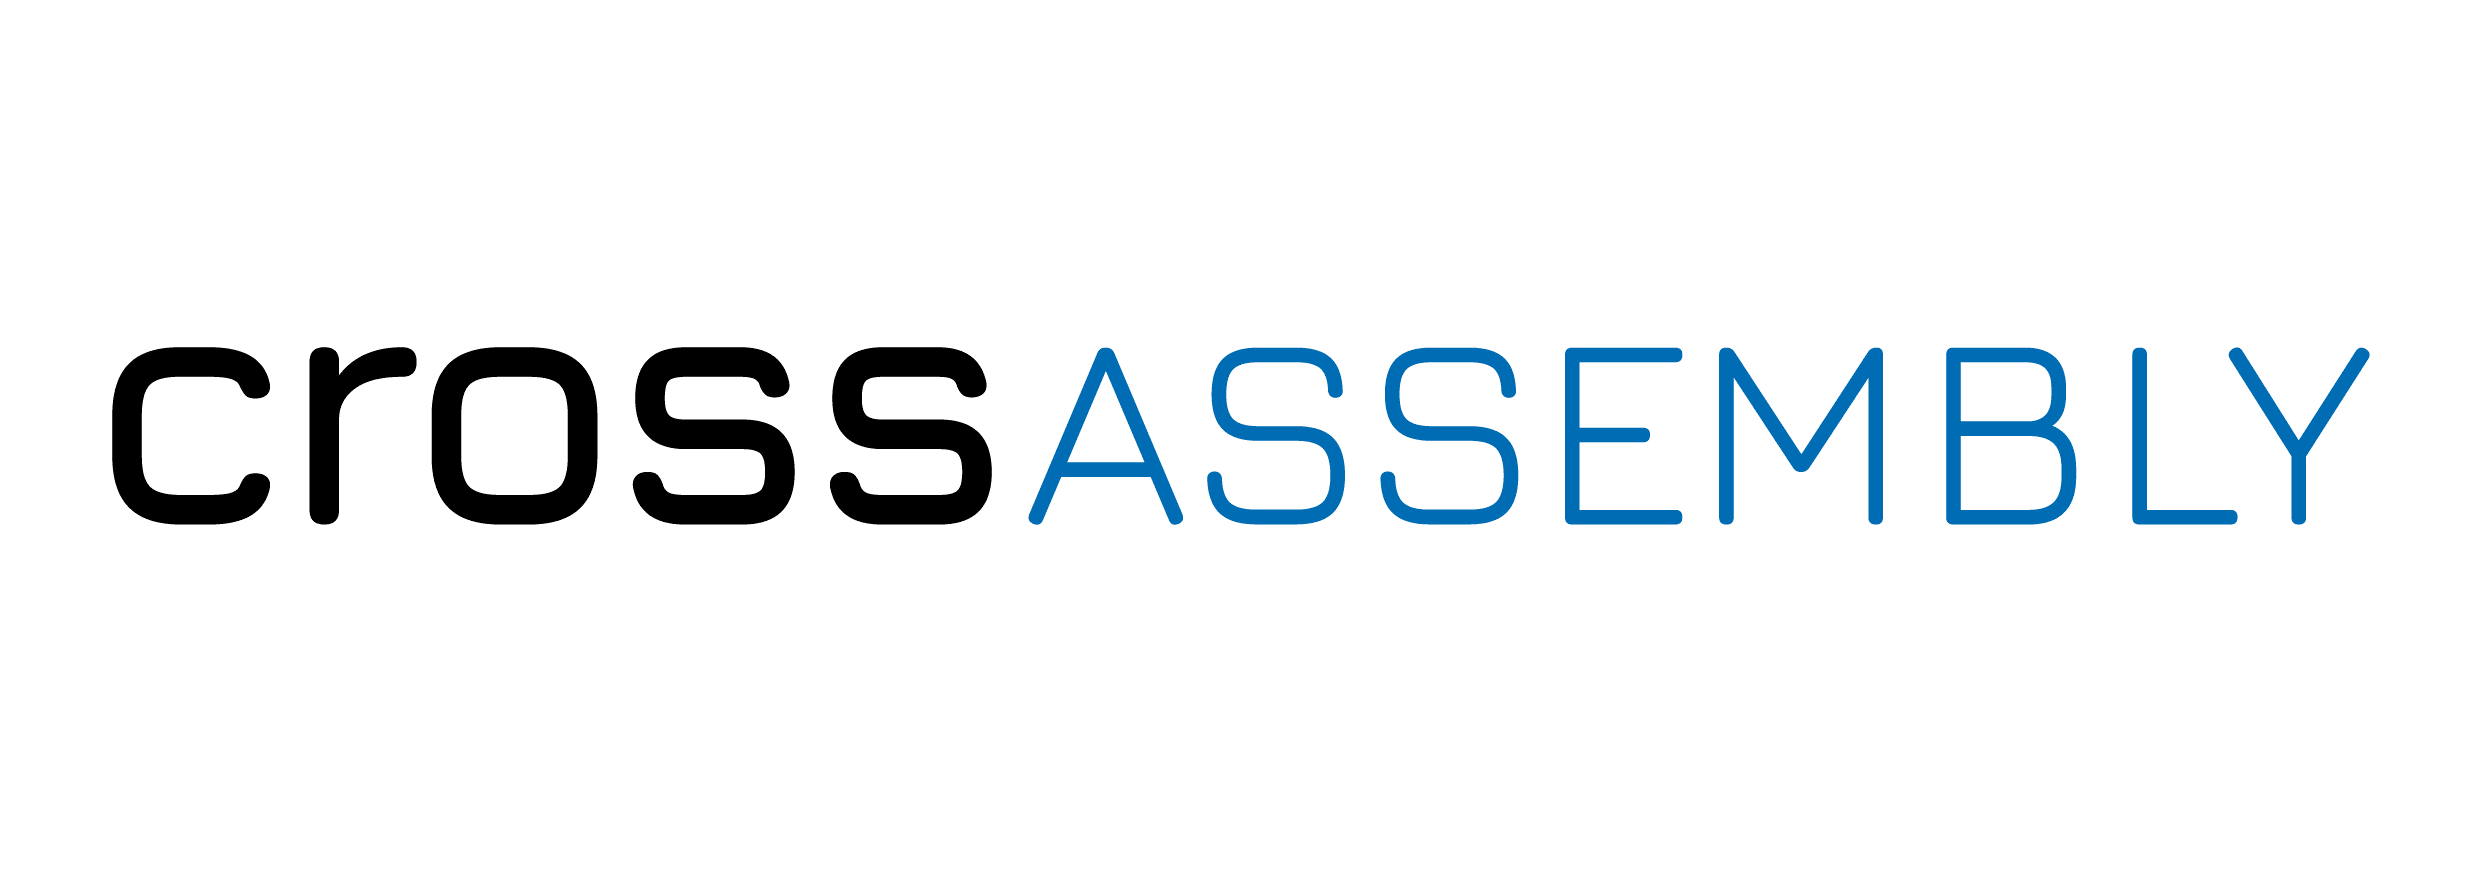 Blau-weisses Text-Logo von der CrossTEQ-Marke &quot;Cross Assembly&quot;